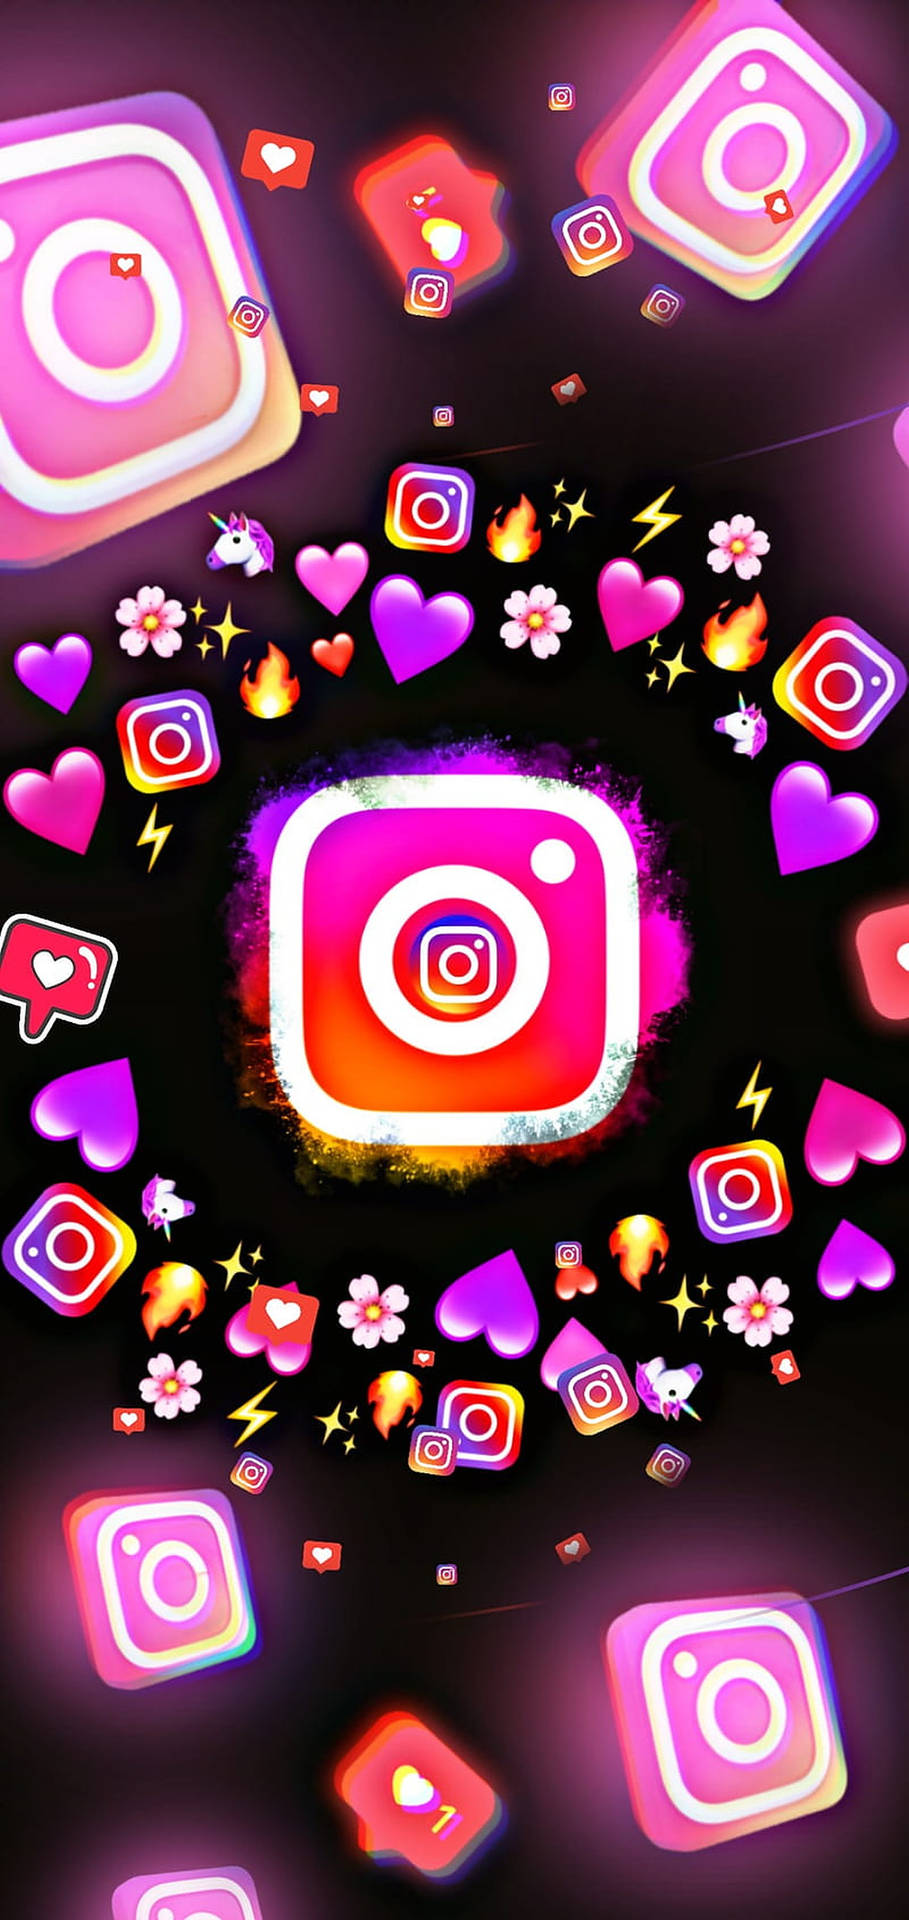 Instagram Icon And Emojis Background